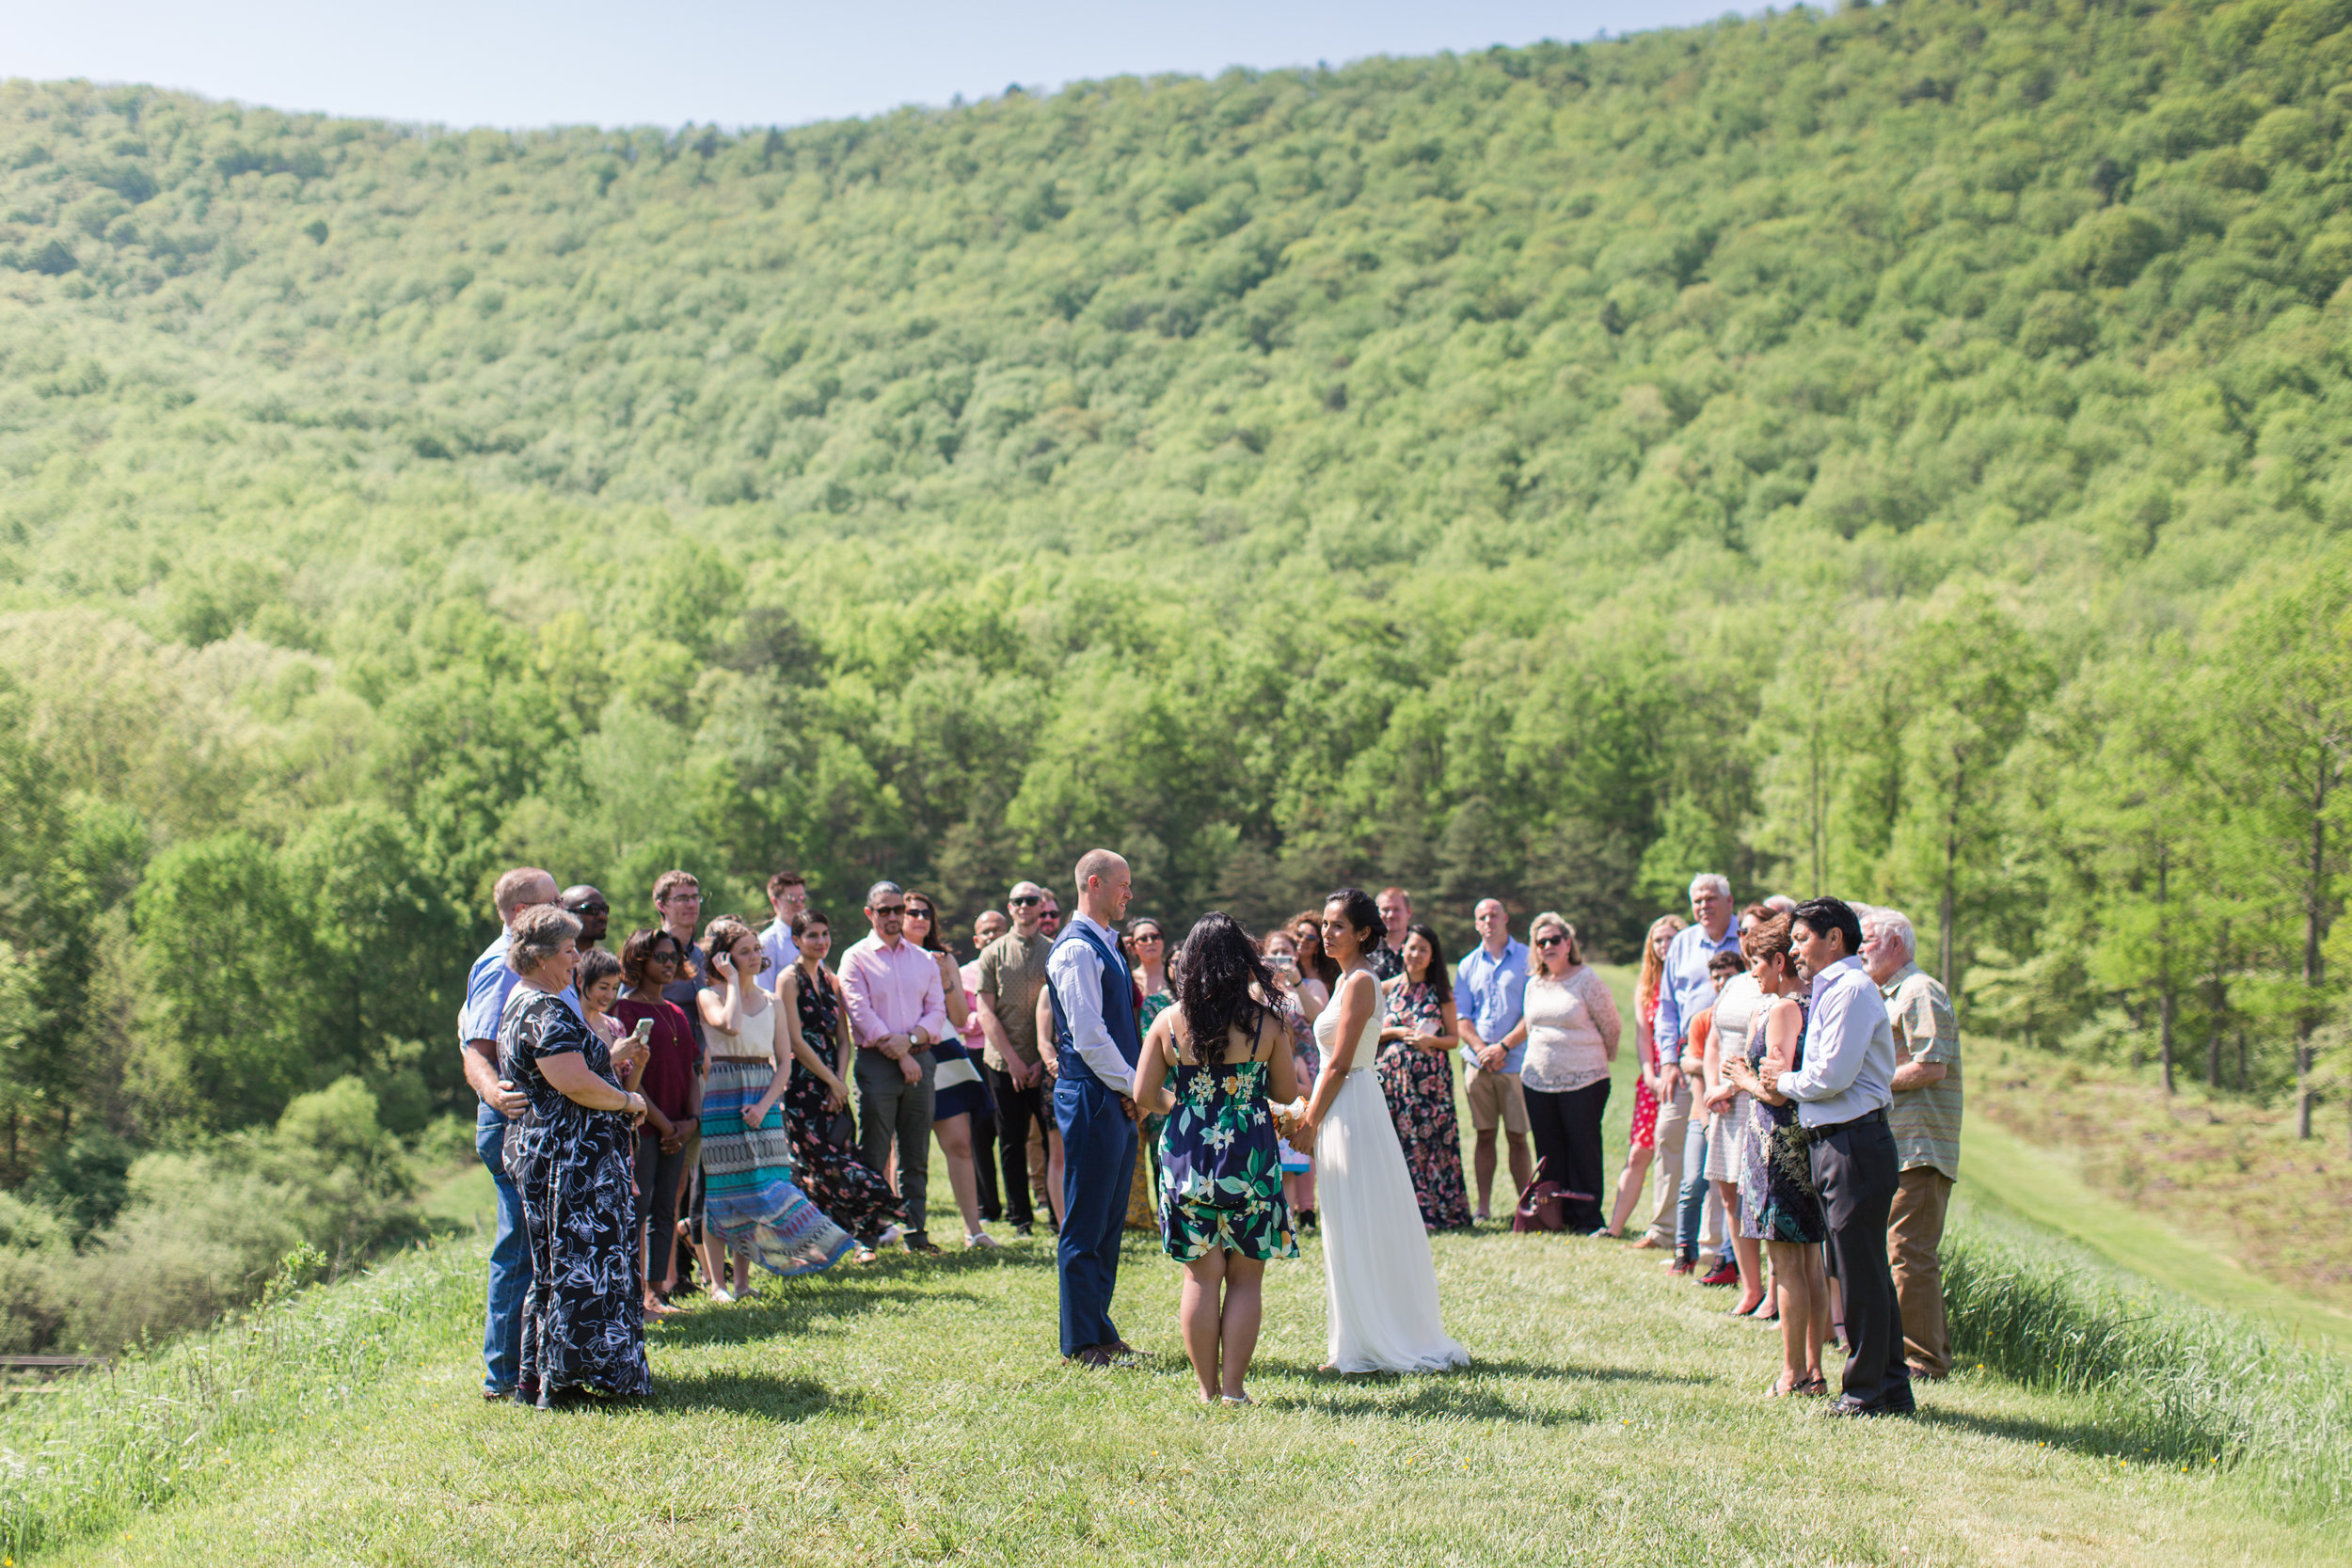 Sherando Lake Wedding || Intimate elopement style wedding in Central Virginia || Lynchburg, Virginia Wedding Photographer || www.ashleyeiban.com